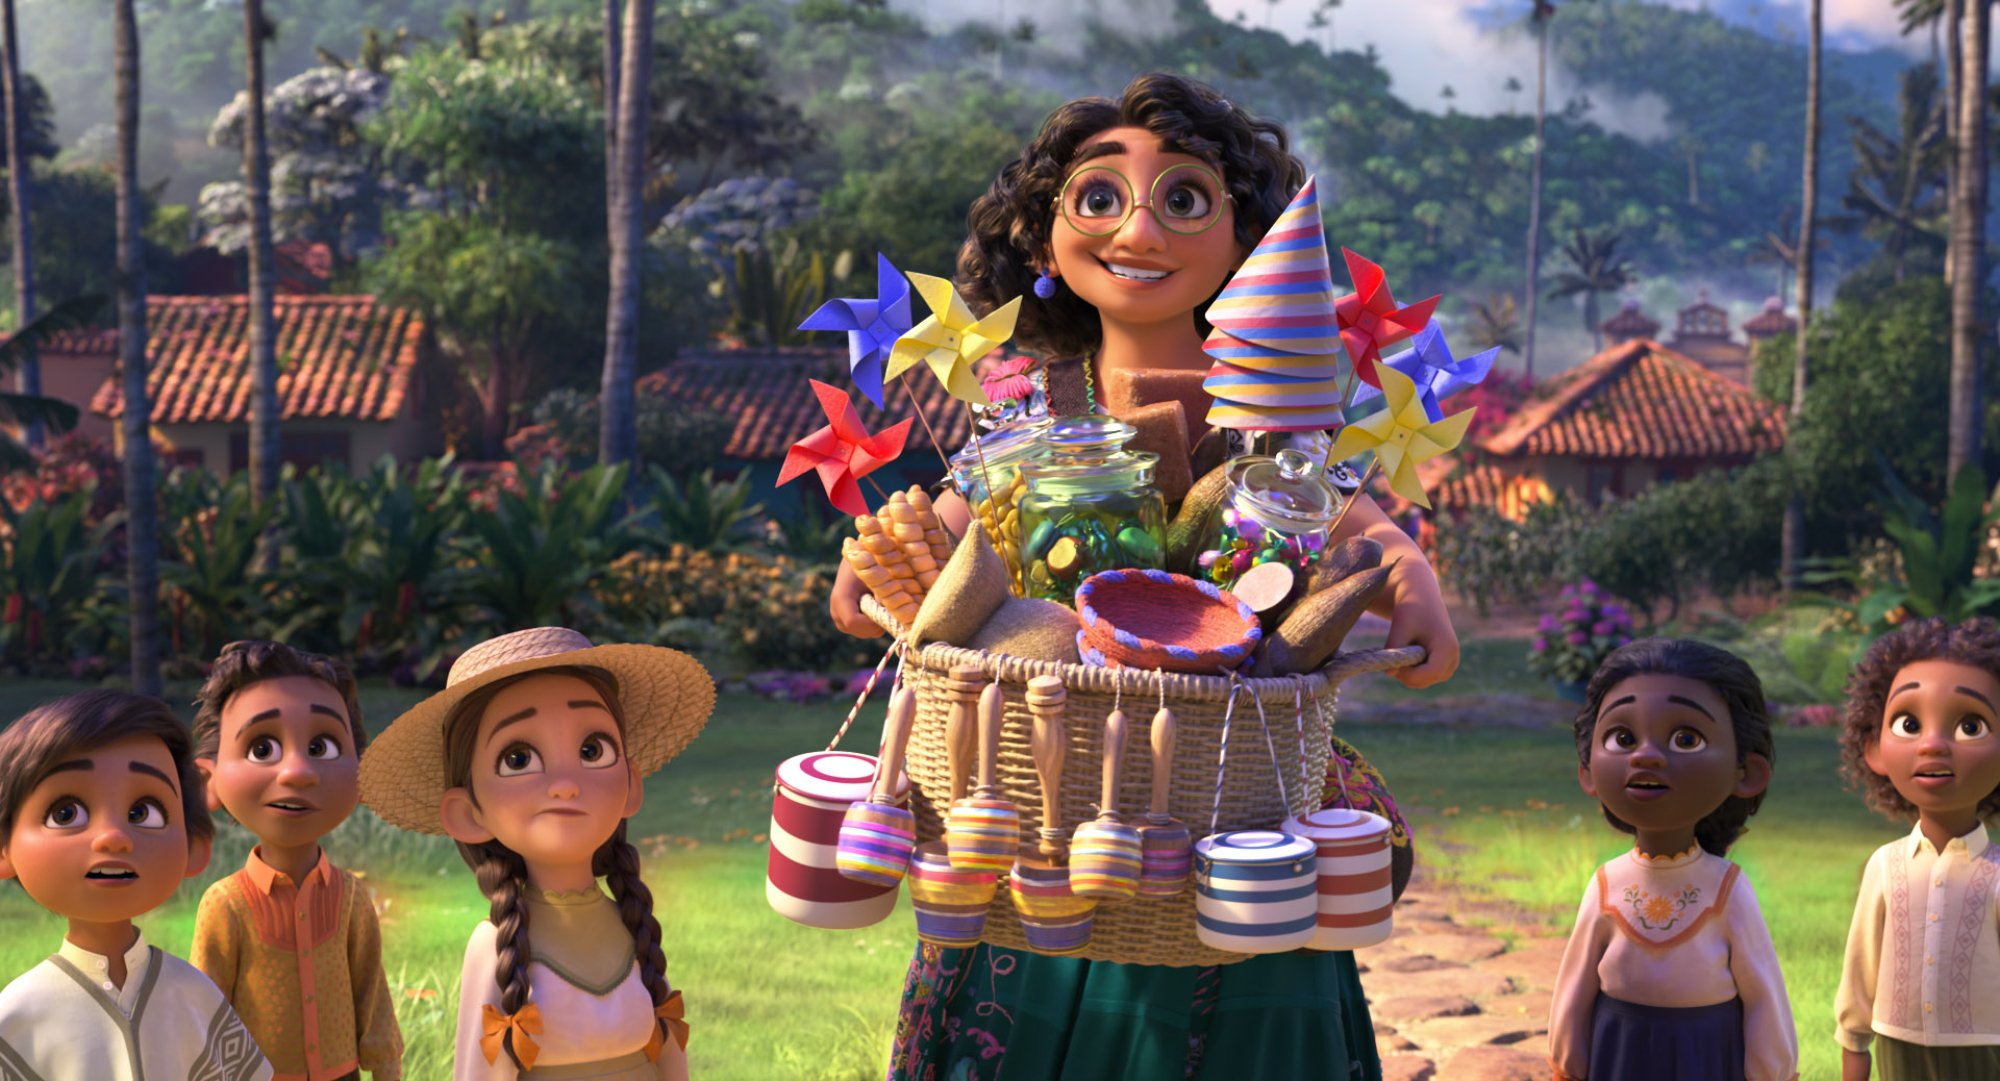 Disney's 'Encanto' Mirabel voiced by Stephanie Beatriz holding a box of fireworks next to children